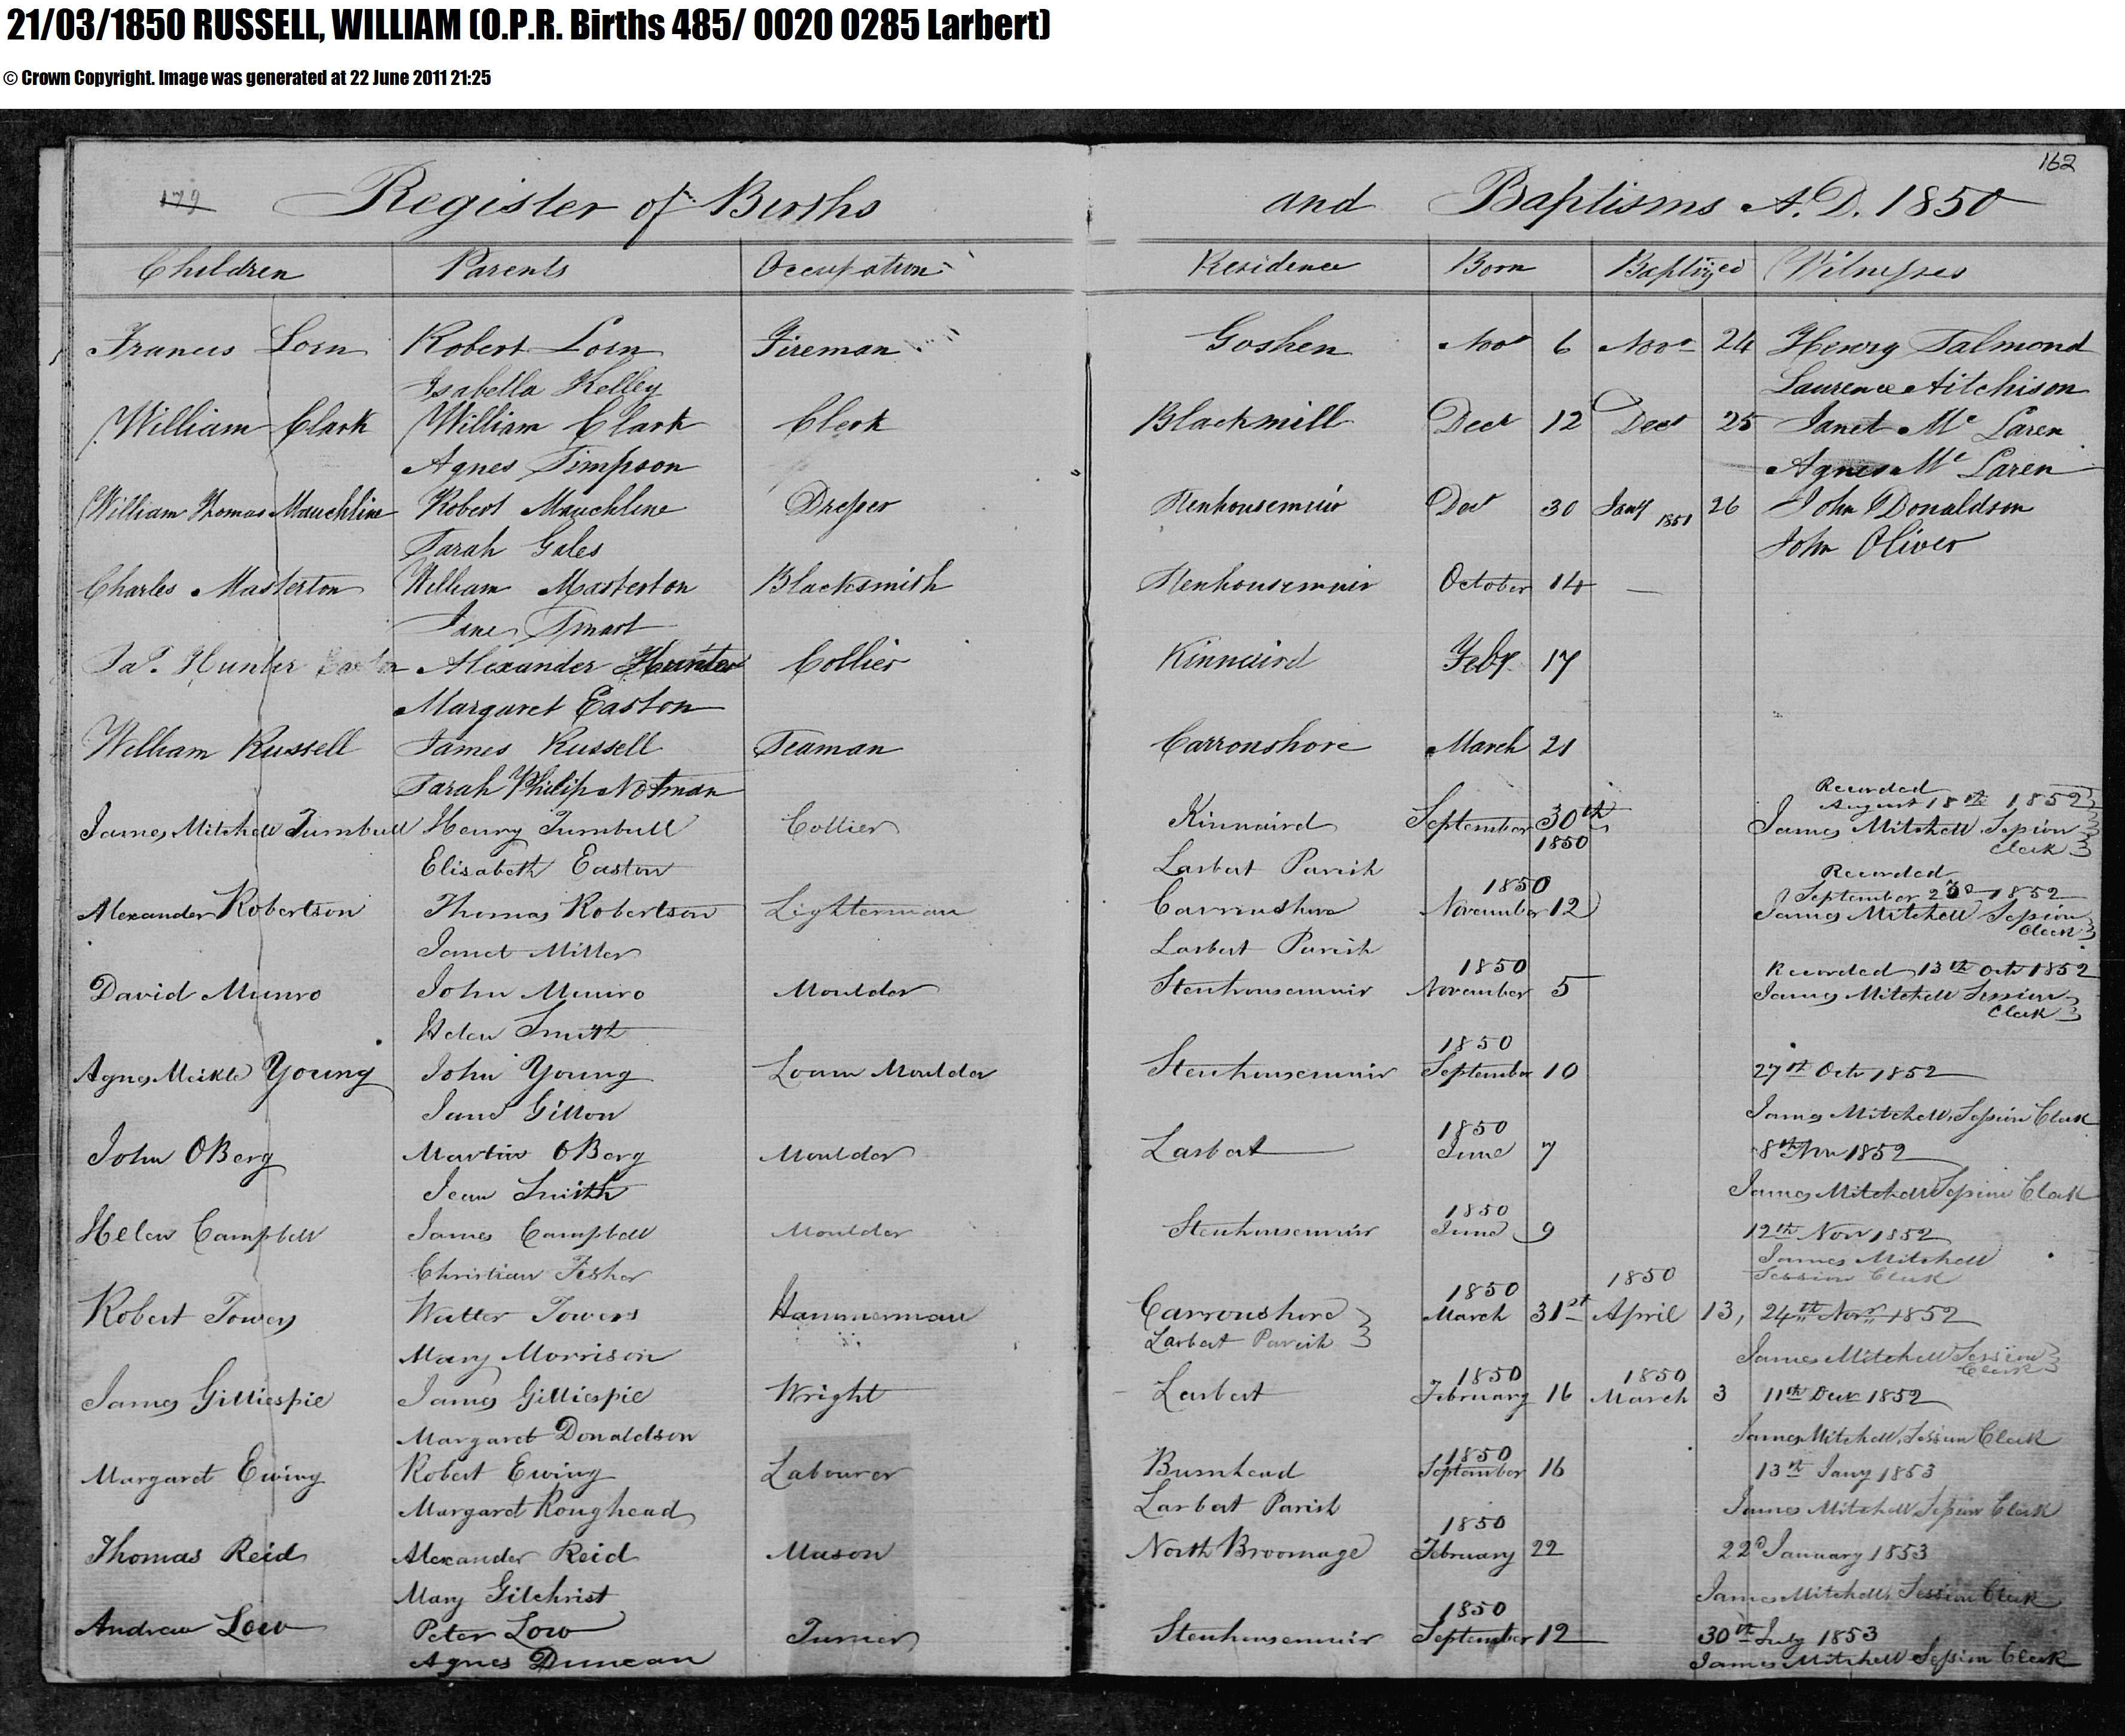 Birth Register Entry 1850 William Notman RUSSELL, March 21, 1850, Linked To: <a href='i933.html' >William Notman Russell</a>